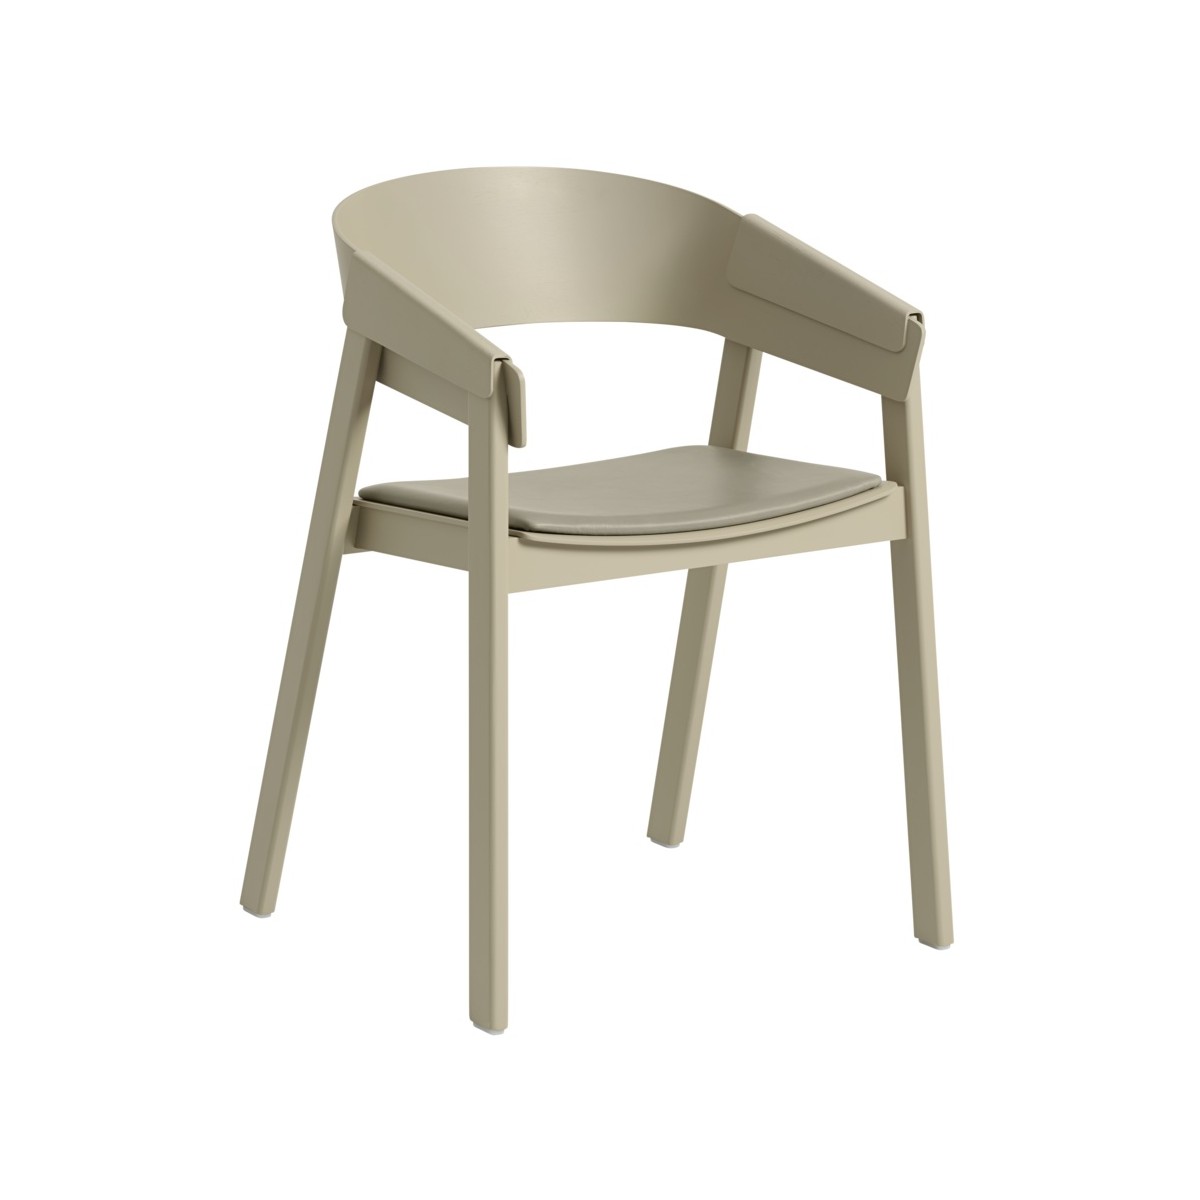 dark beige + assise cuir Refine stone - chaise Cover Armchair